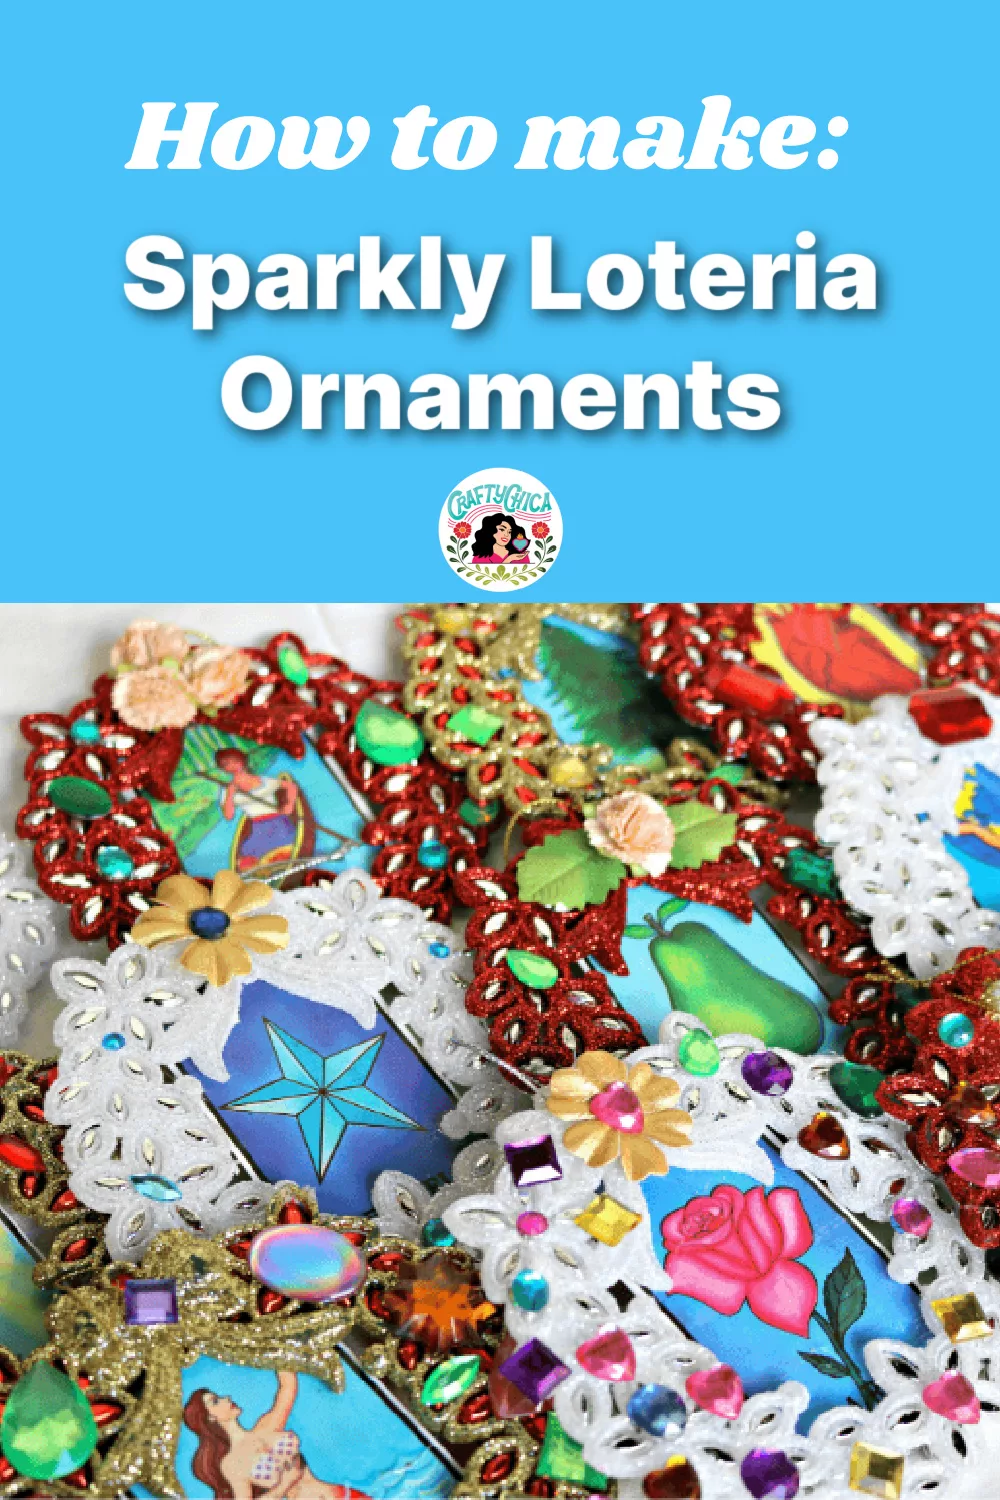 loteria ornaments